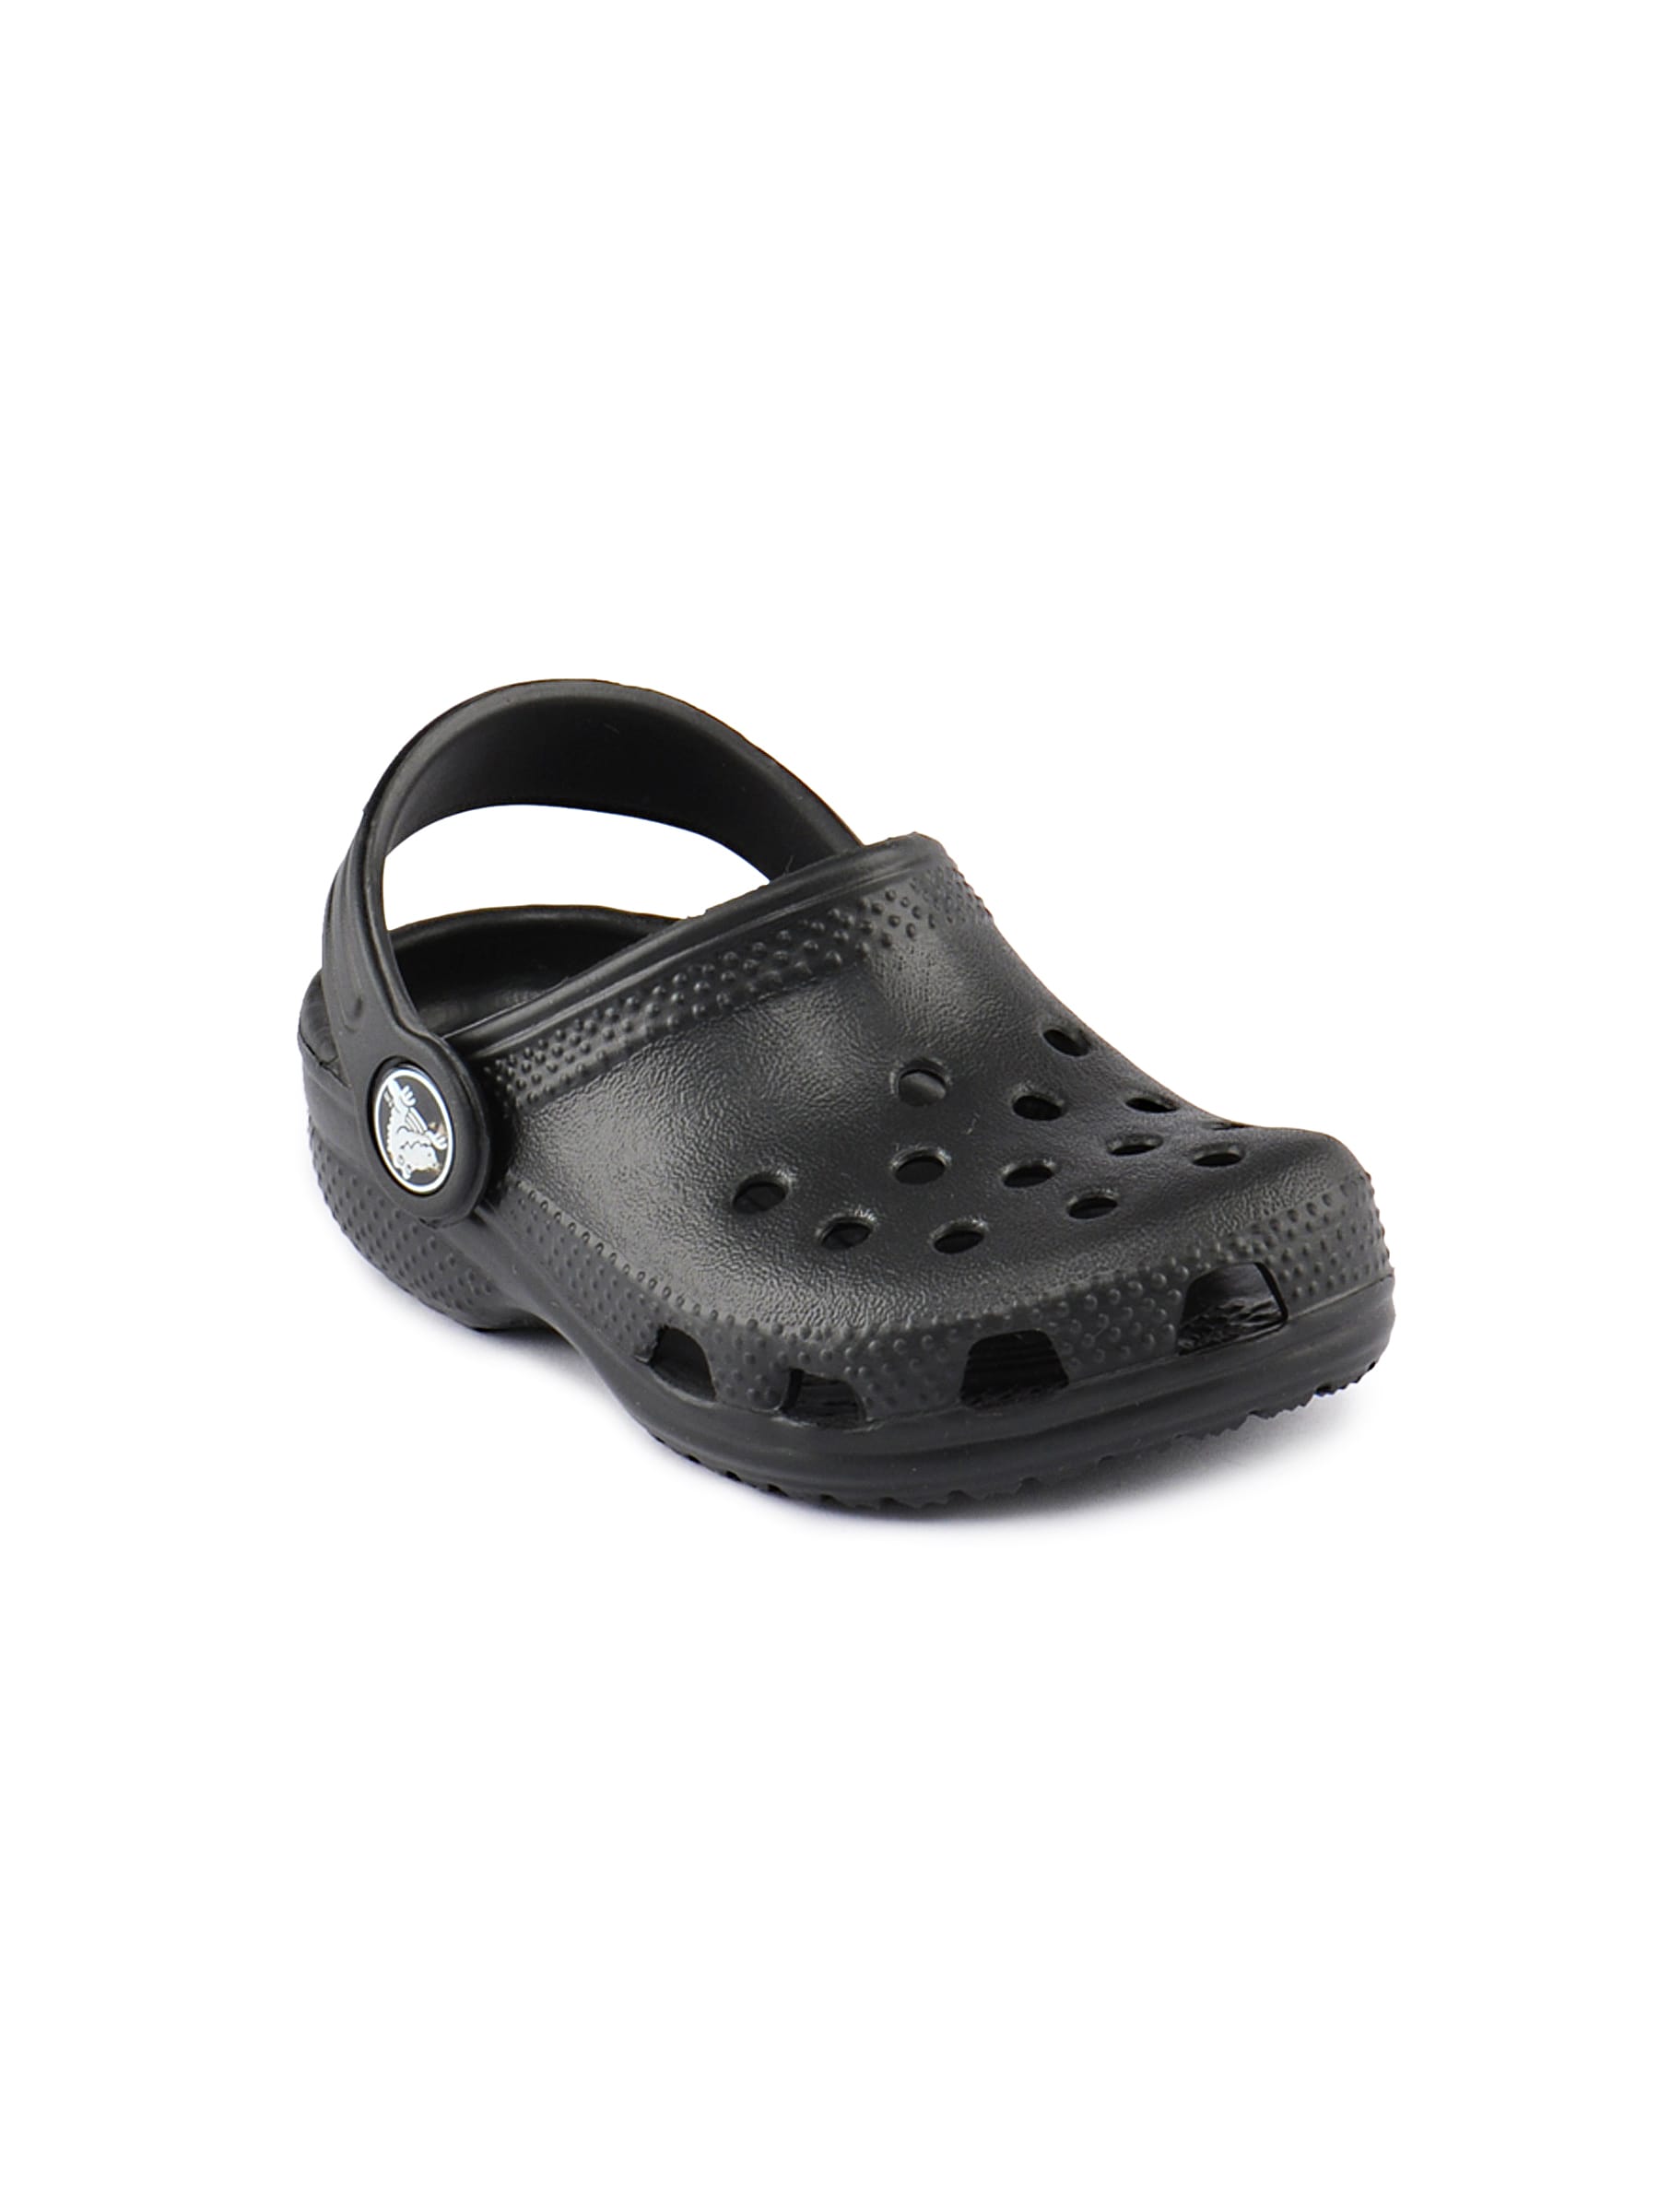 Crocs Kids cayman Kids-Unisex Black Sandal